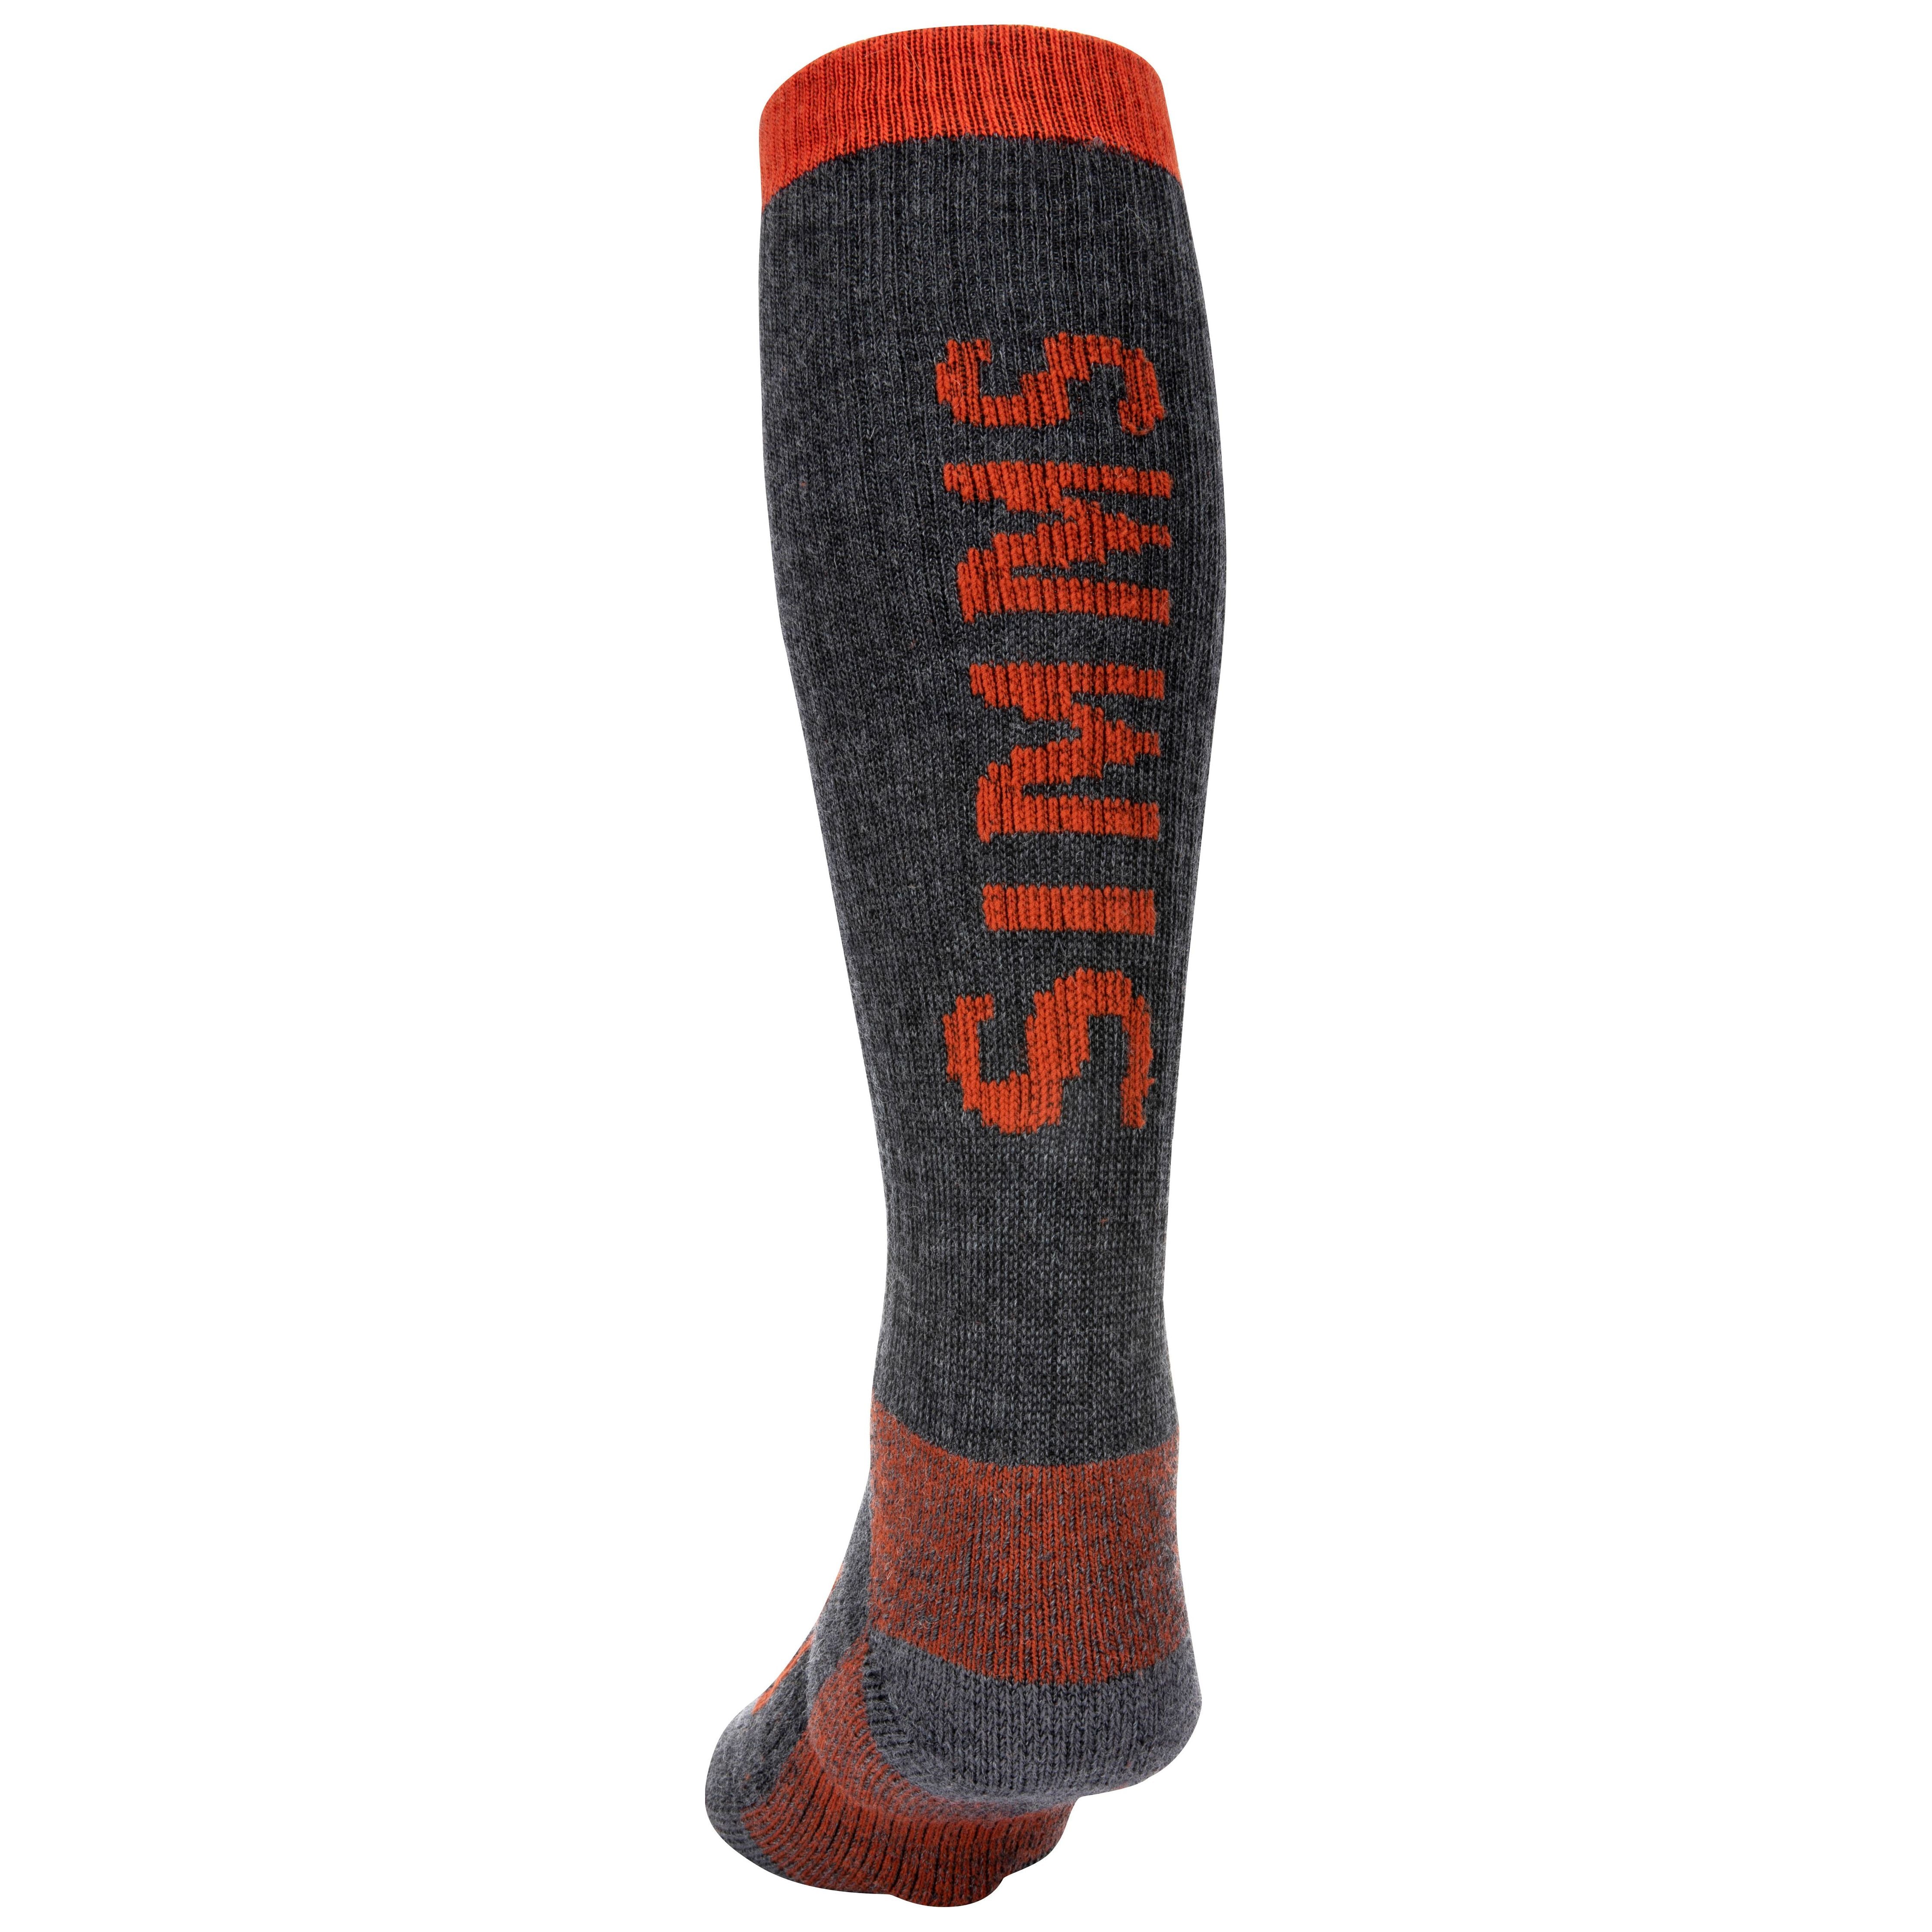 Simms Merino Thermal OTC Socks Carbon Image 1